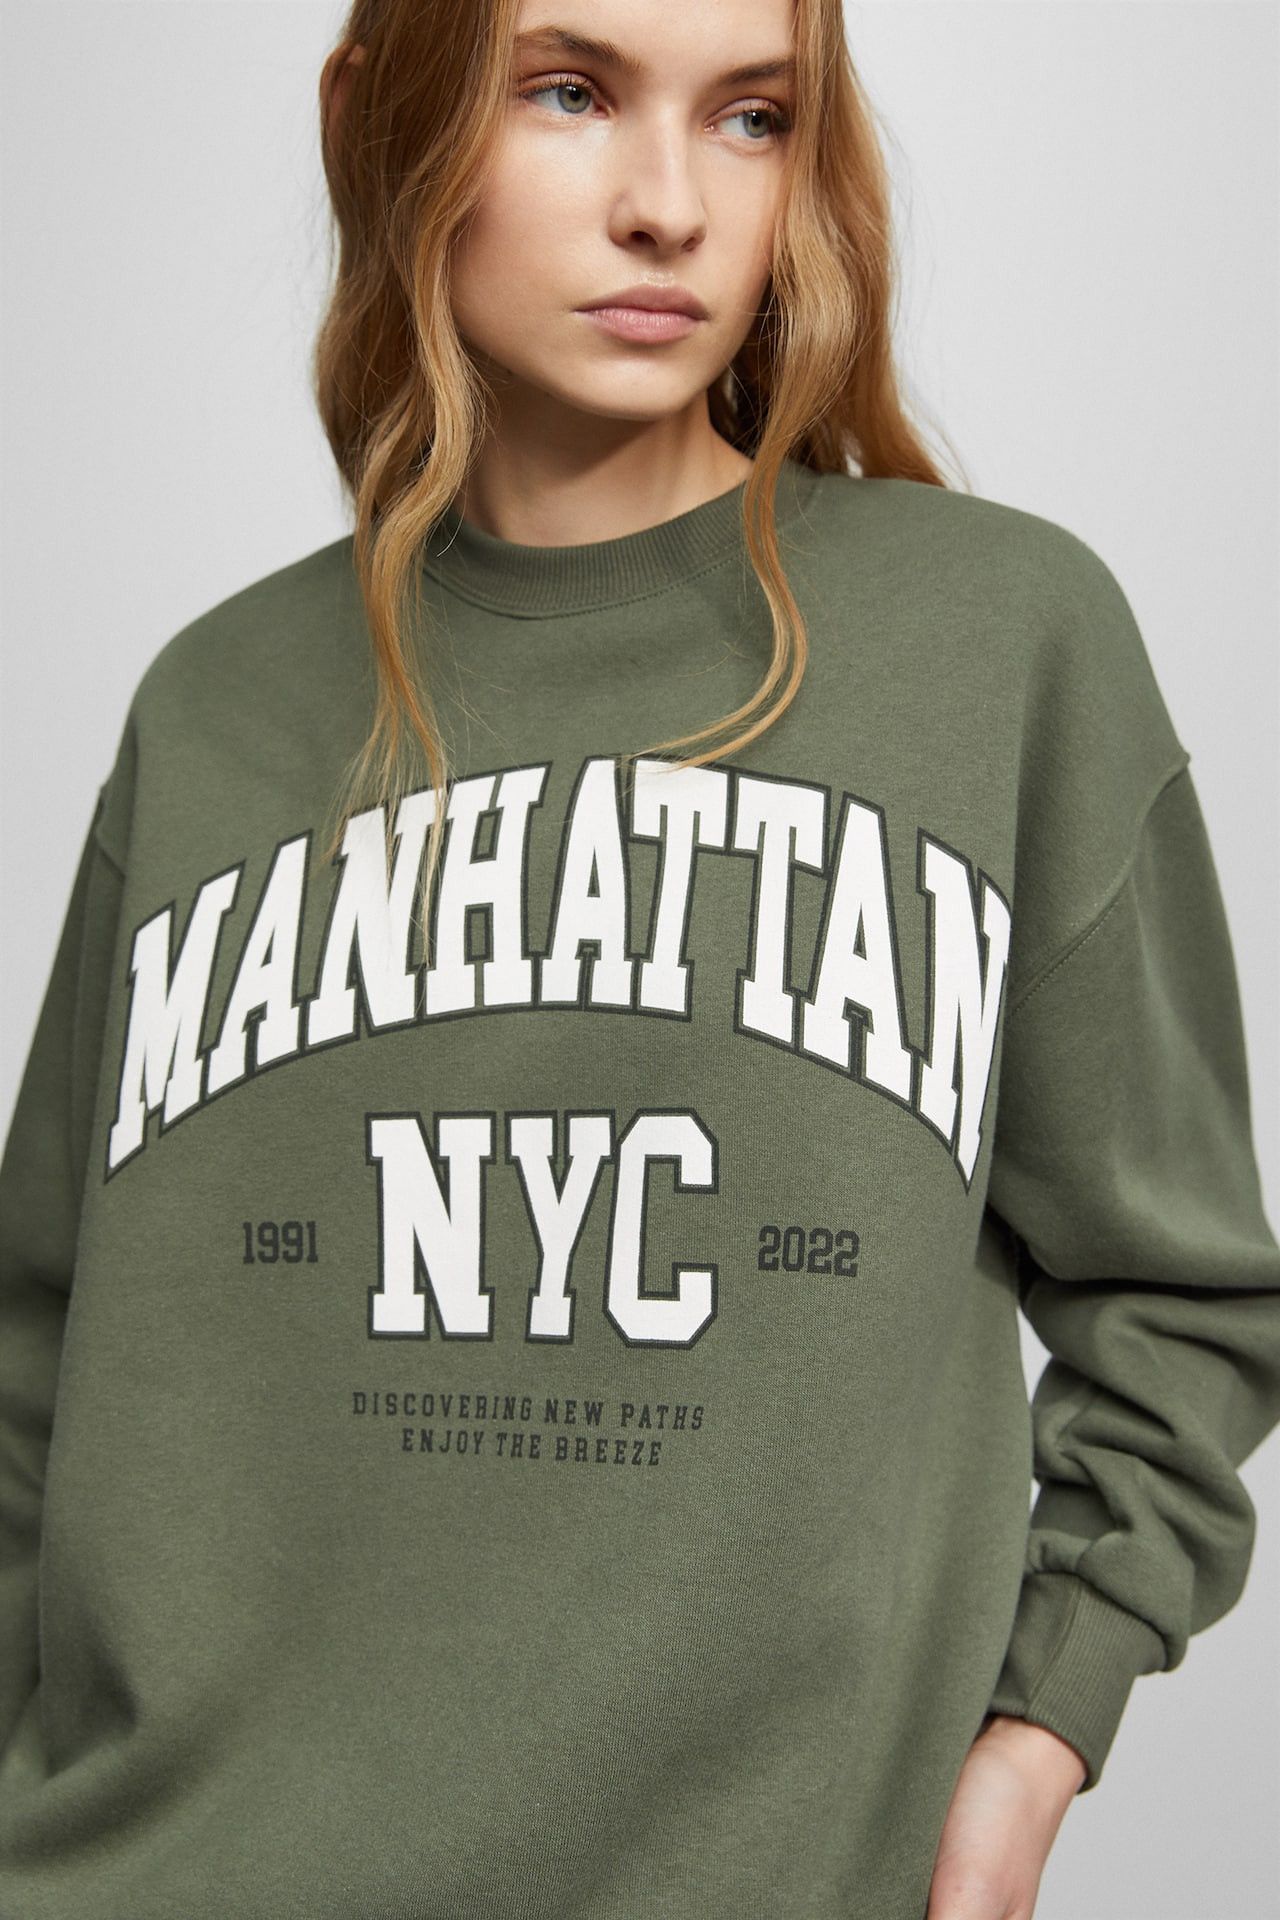 Varsity round neck sweatshirt | Green Sweatshirt | Winter Outfit Inspo | Budget Fashion | PULL and BEAR UK